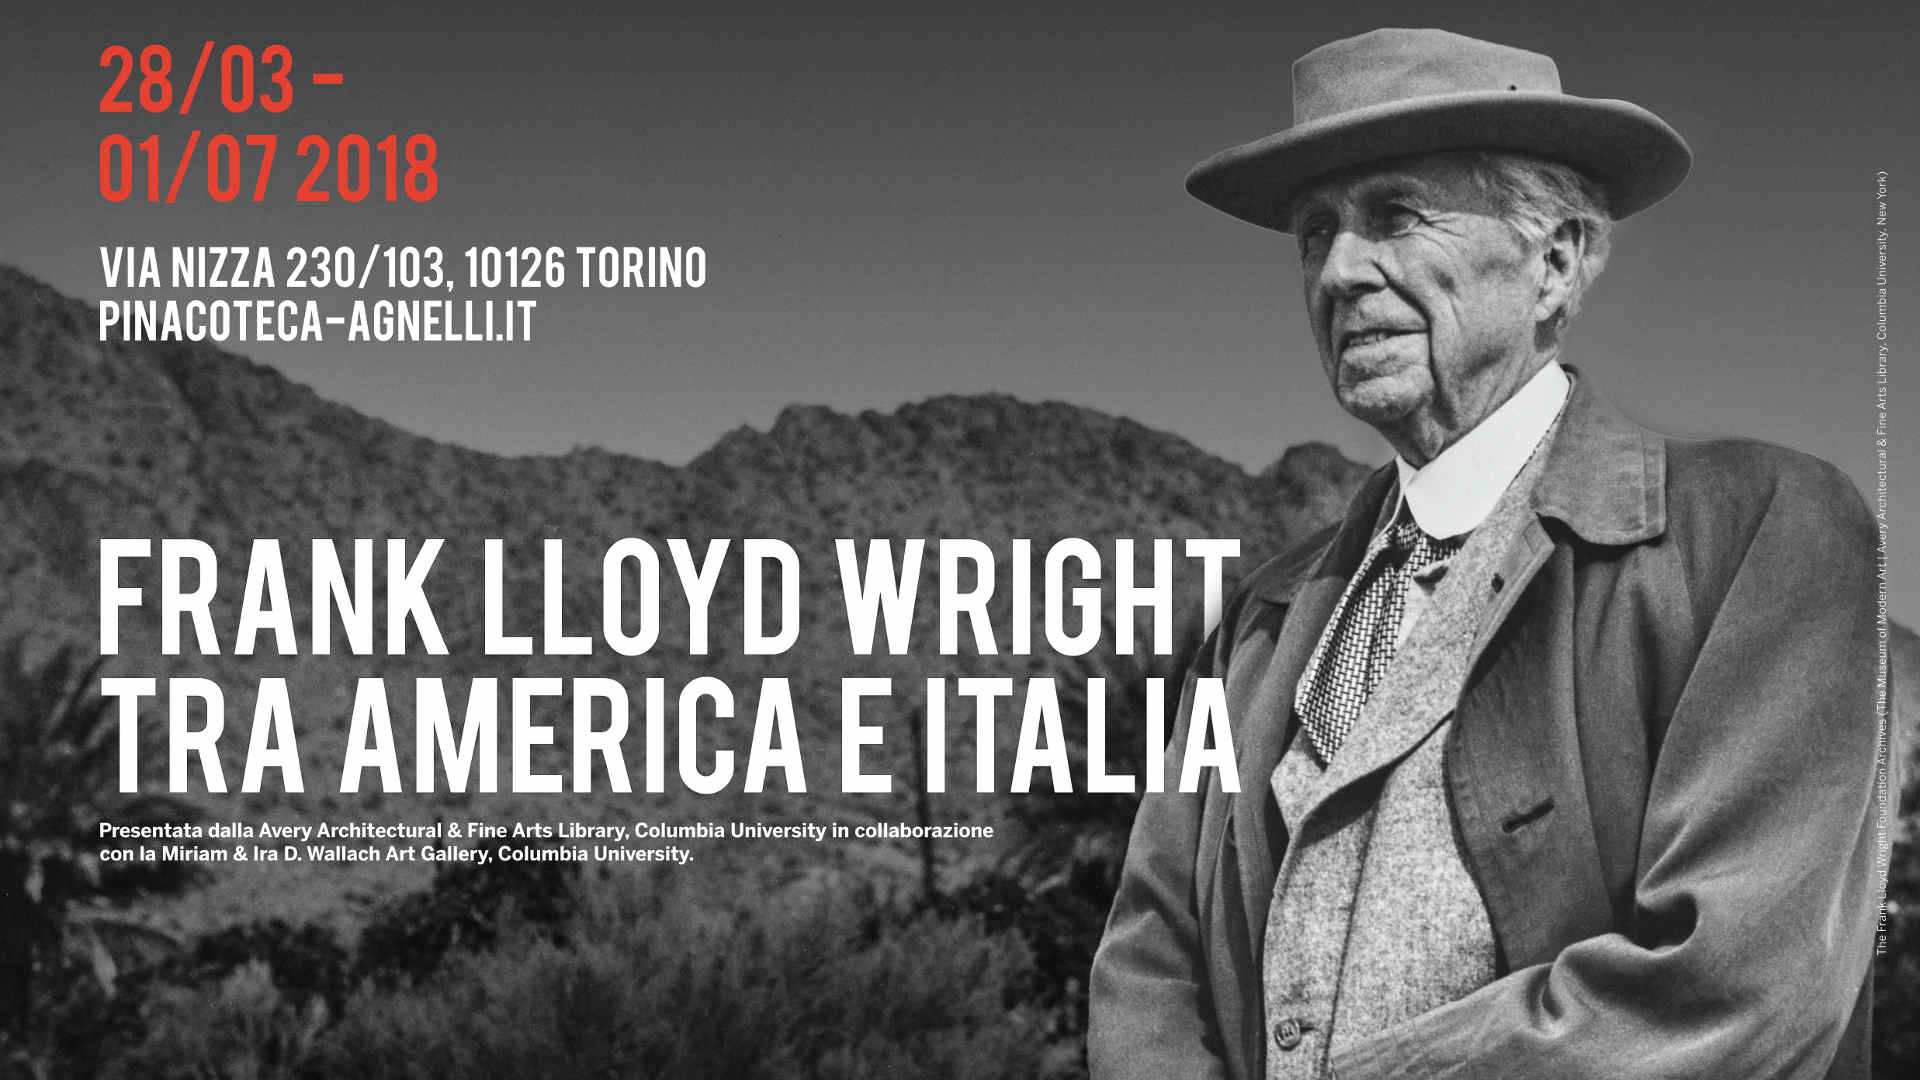 Frank Lloyd Wright tra America e Italia - Torino 2018